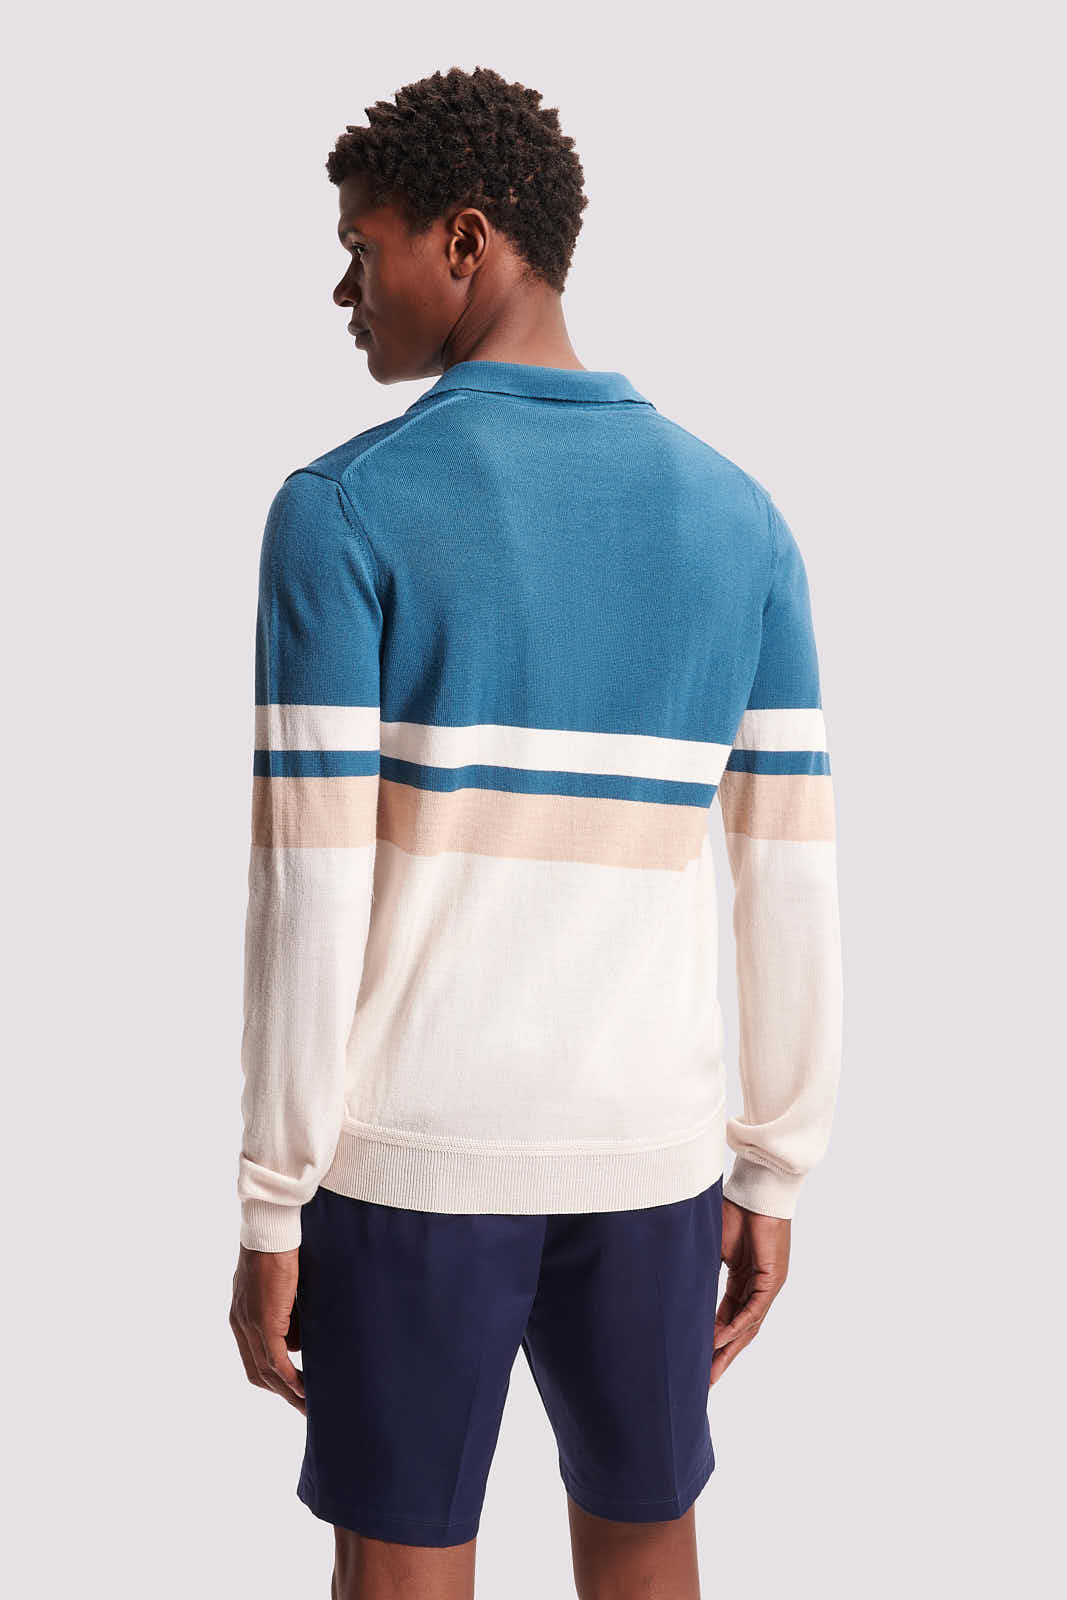 Merino Wool Long Sleeve Polo Shirt in Riviera Teal